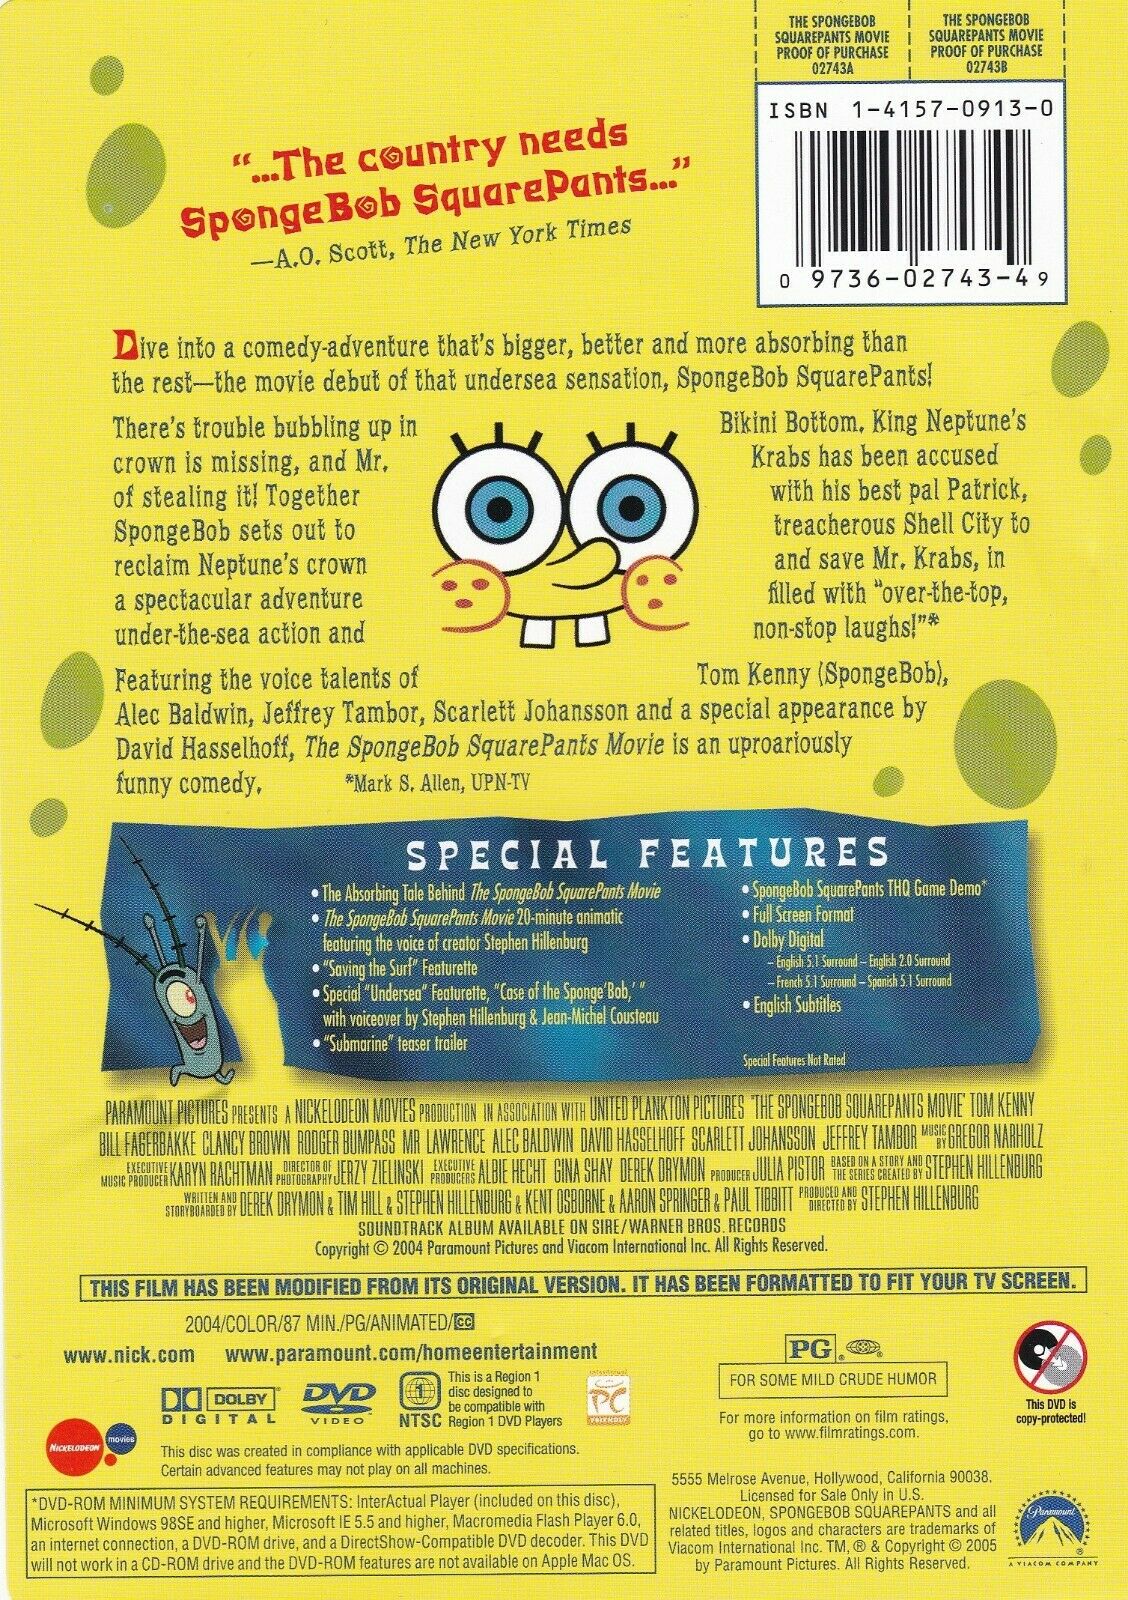 Image Spongebob Squarepants Movie 2 Encyclopedia